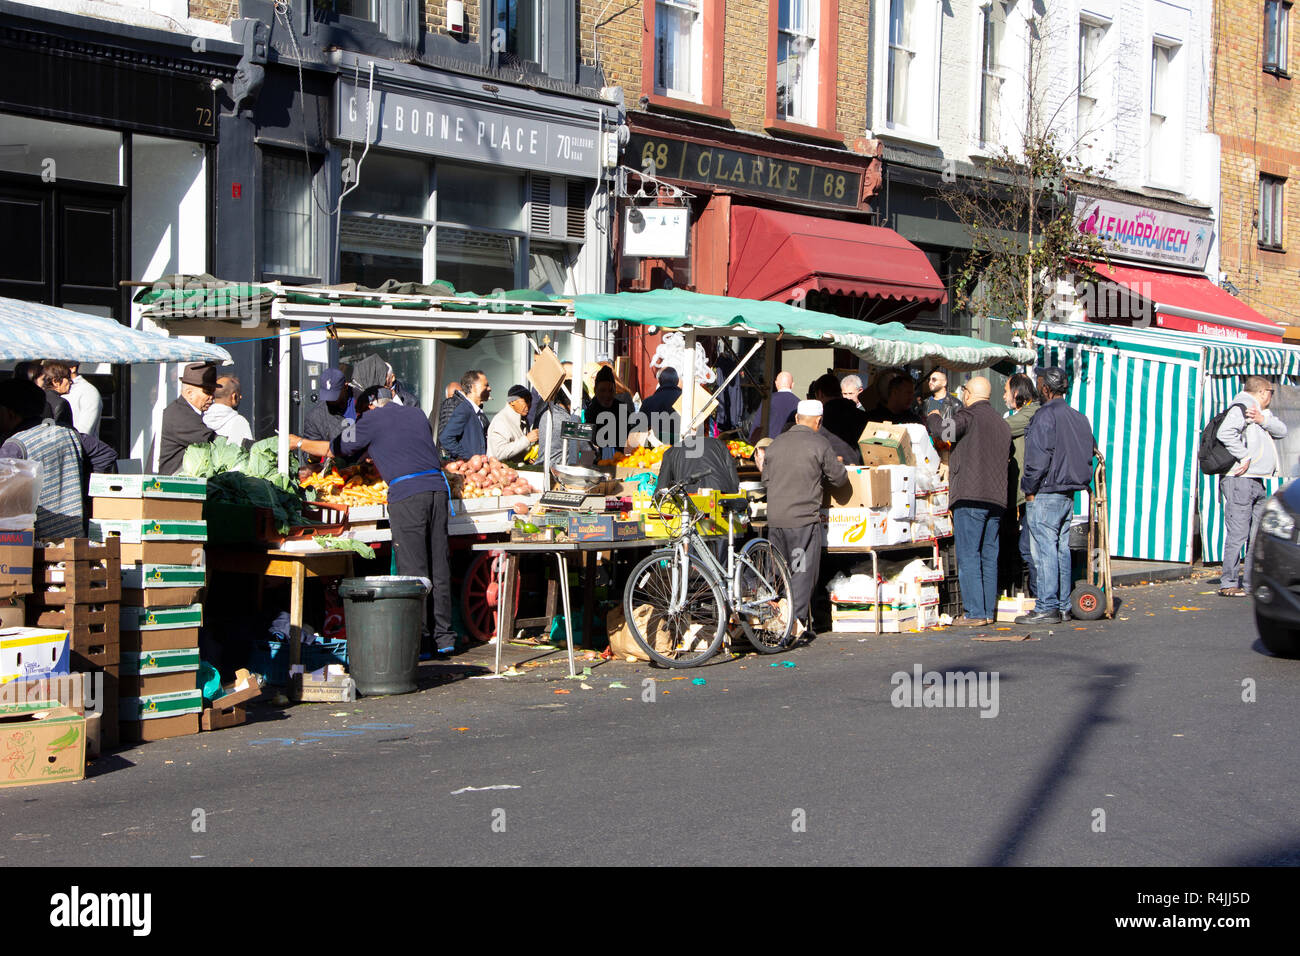 Fruit and veg market in Portobello, London Stock Photo